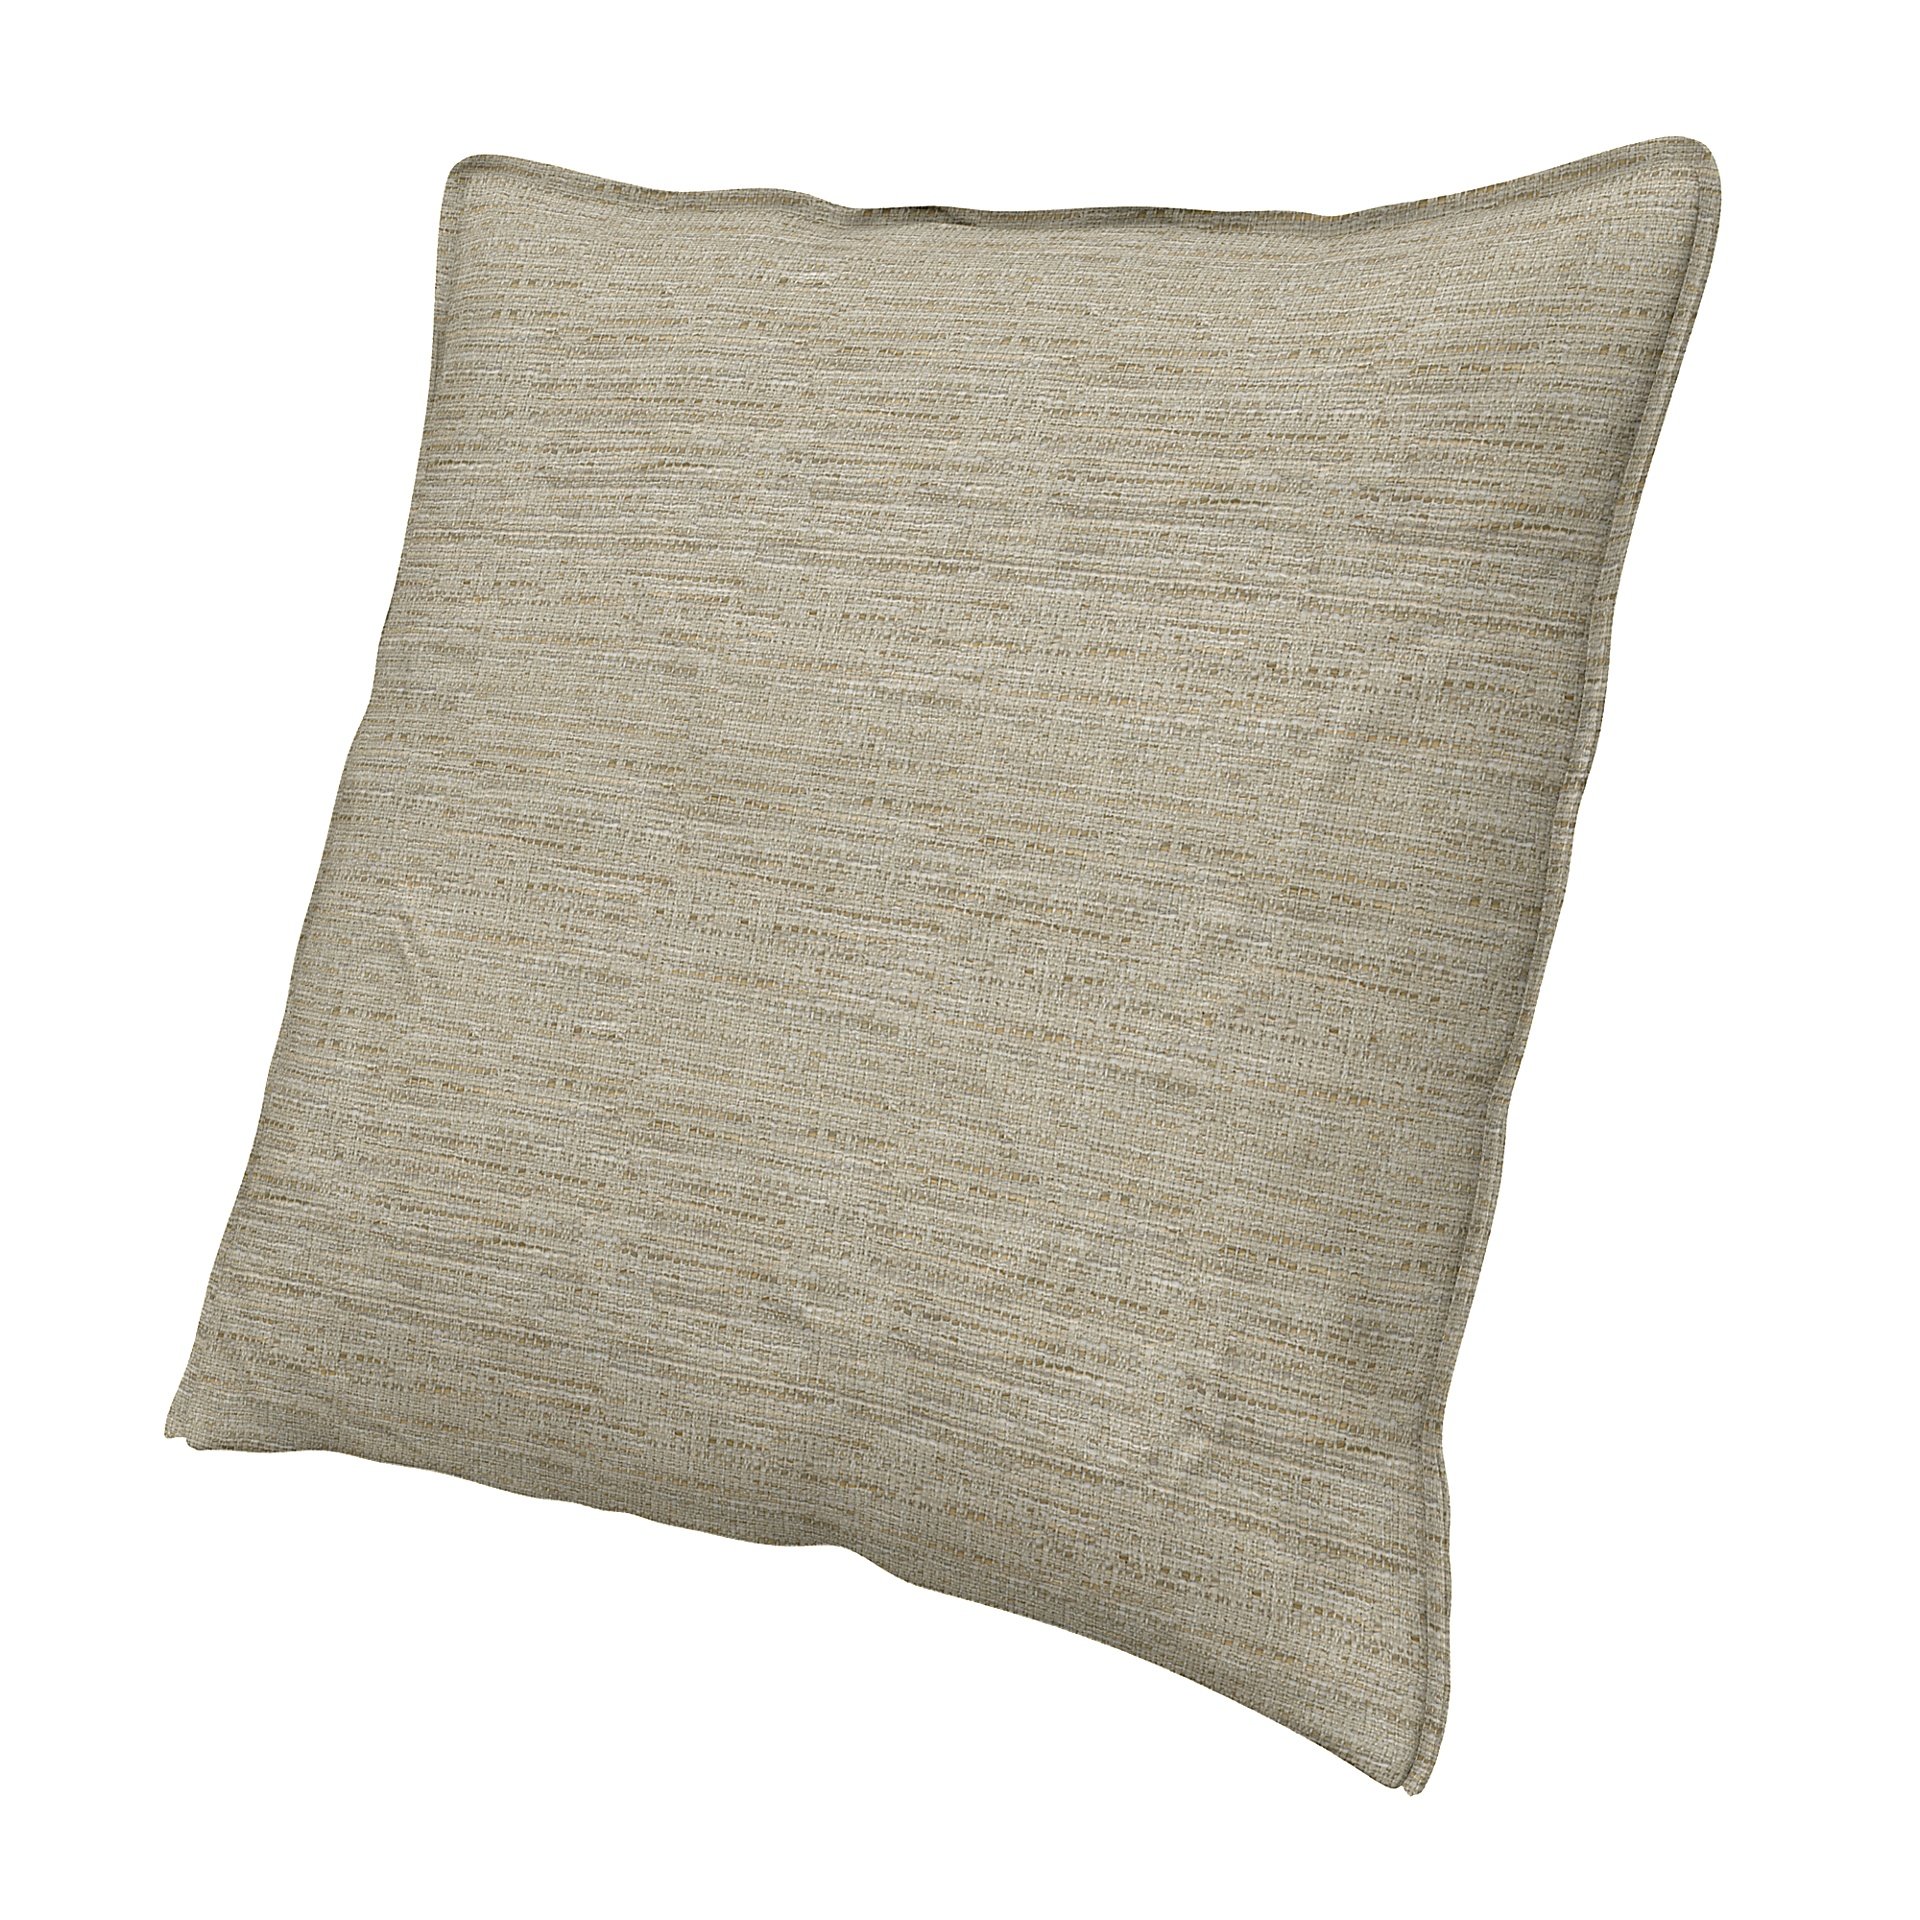 Cushion cover, Light Sand, Boucle & Texture - Bemz